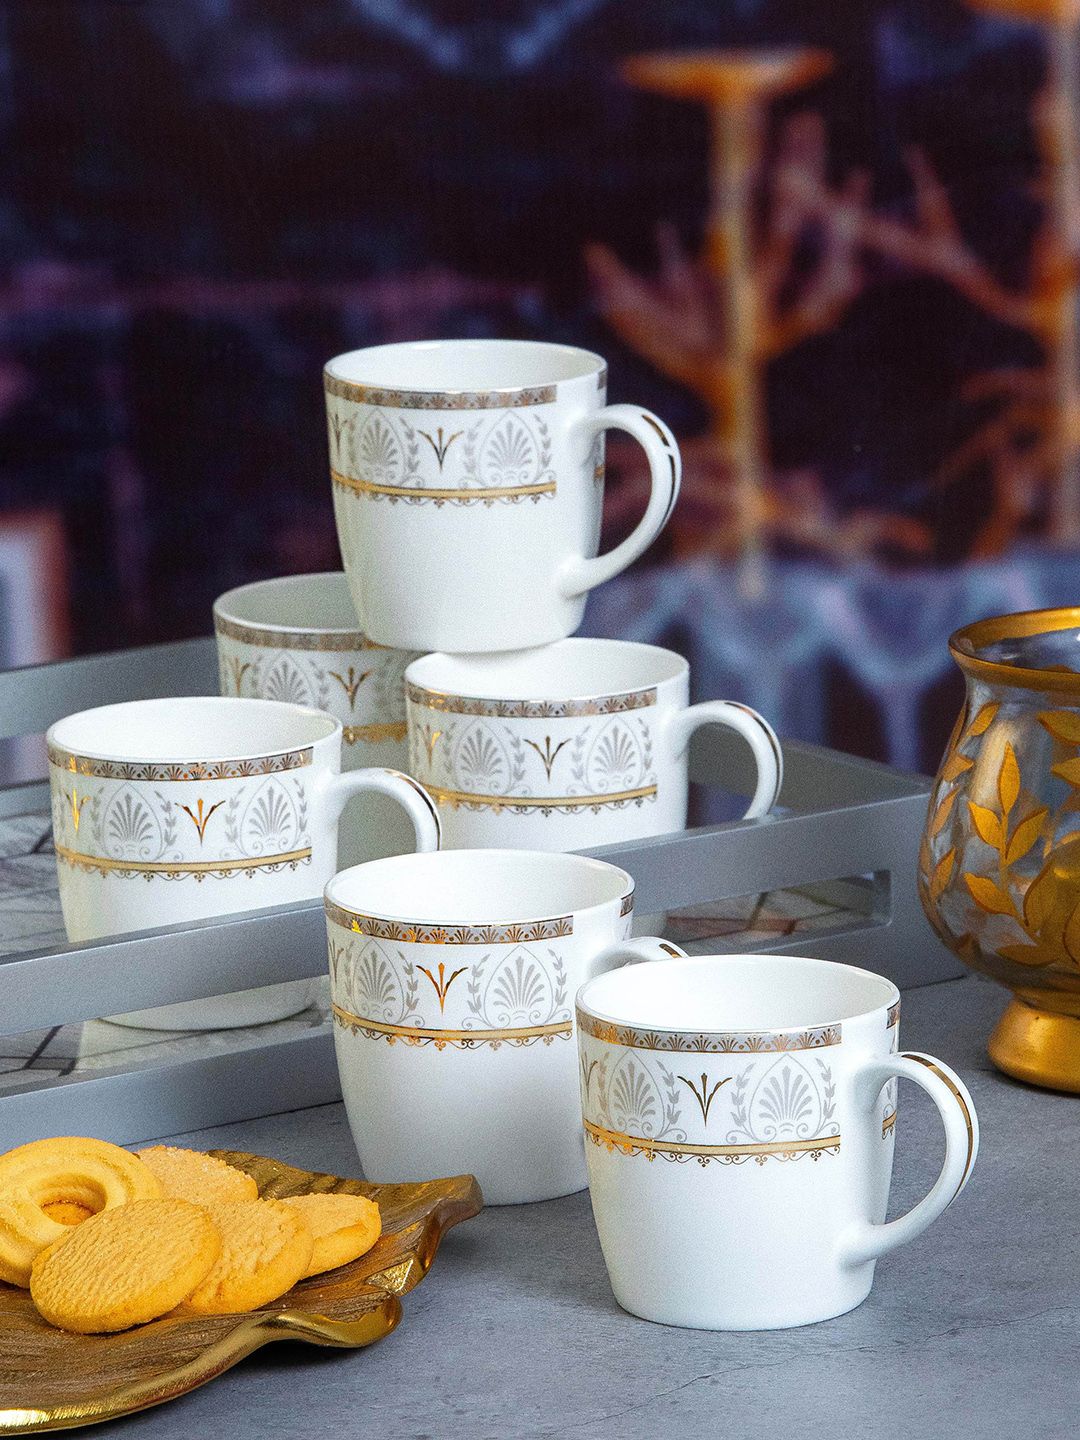 SONAKI White & Gold-Toned Gold-Toned Gold-Toned Ethnic Motifs Printed Bone China Glossy Mugs Set of Cups and Mugs Price in India